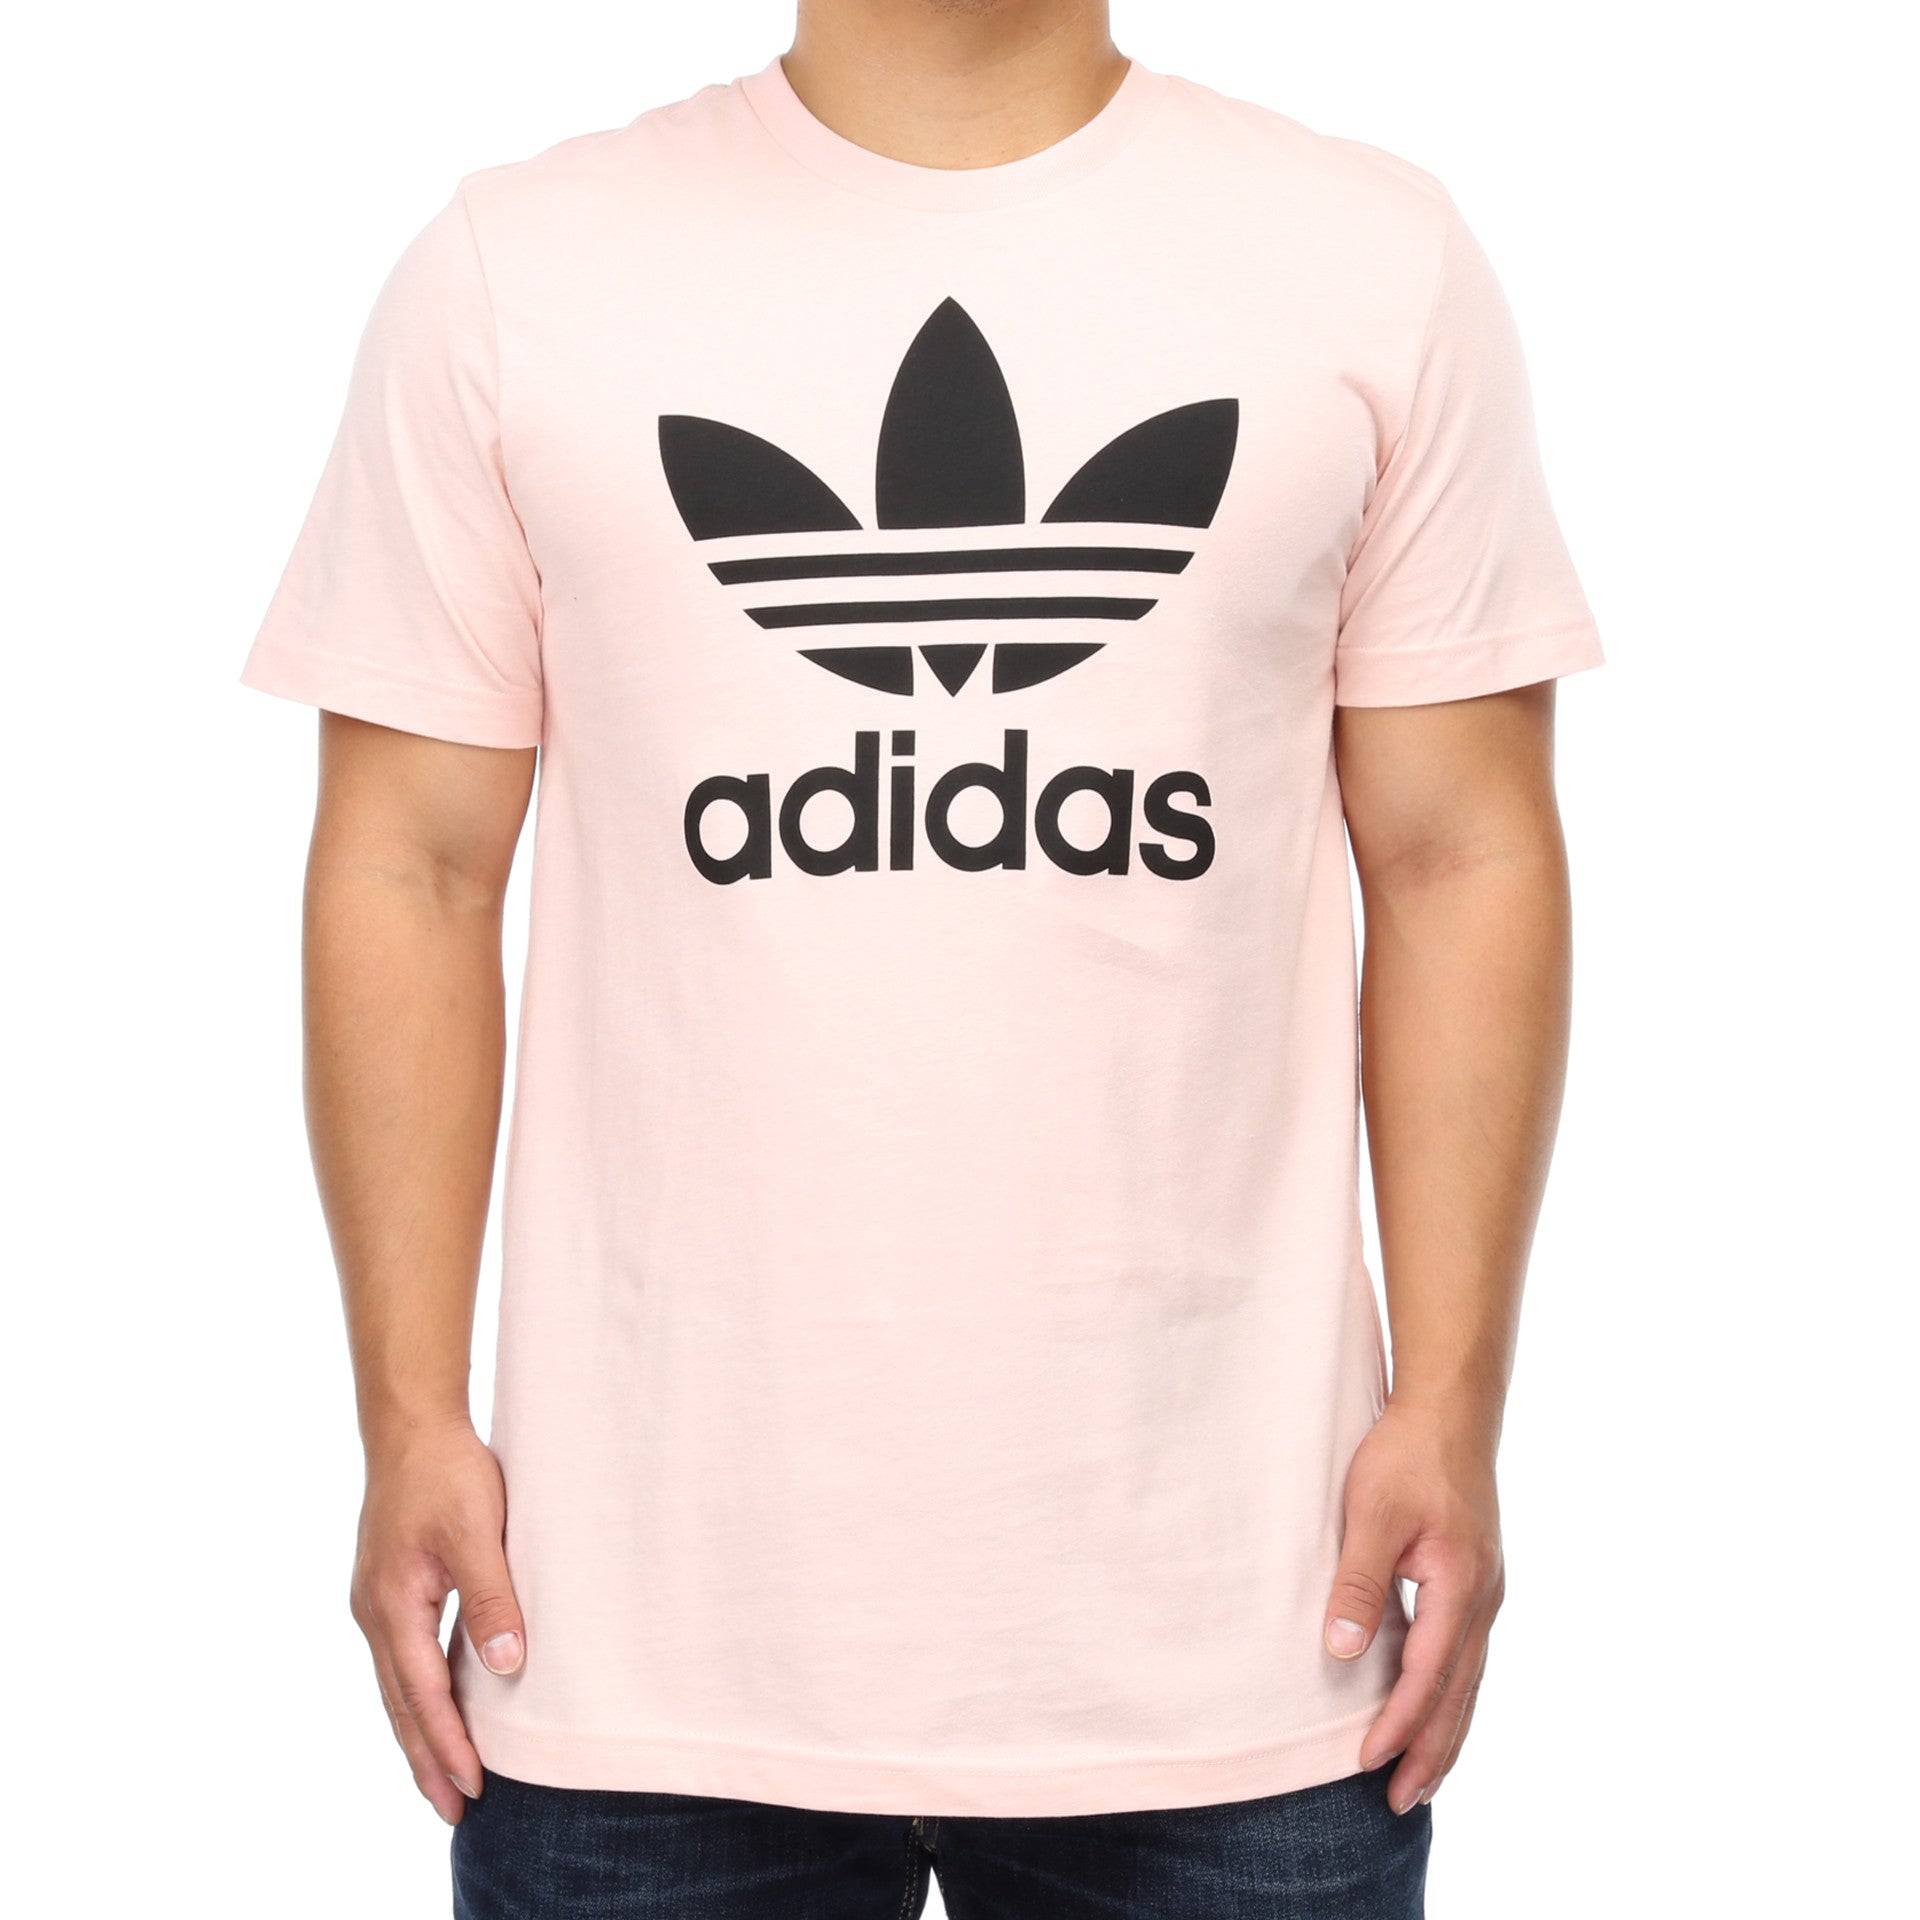 Adidas Original Trefoil Tee - Pink New Star